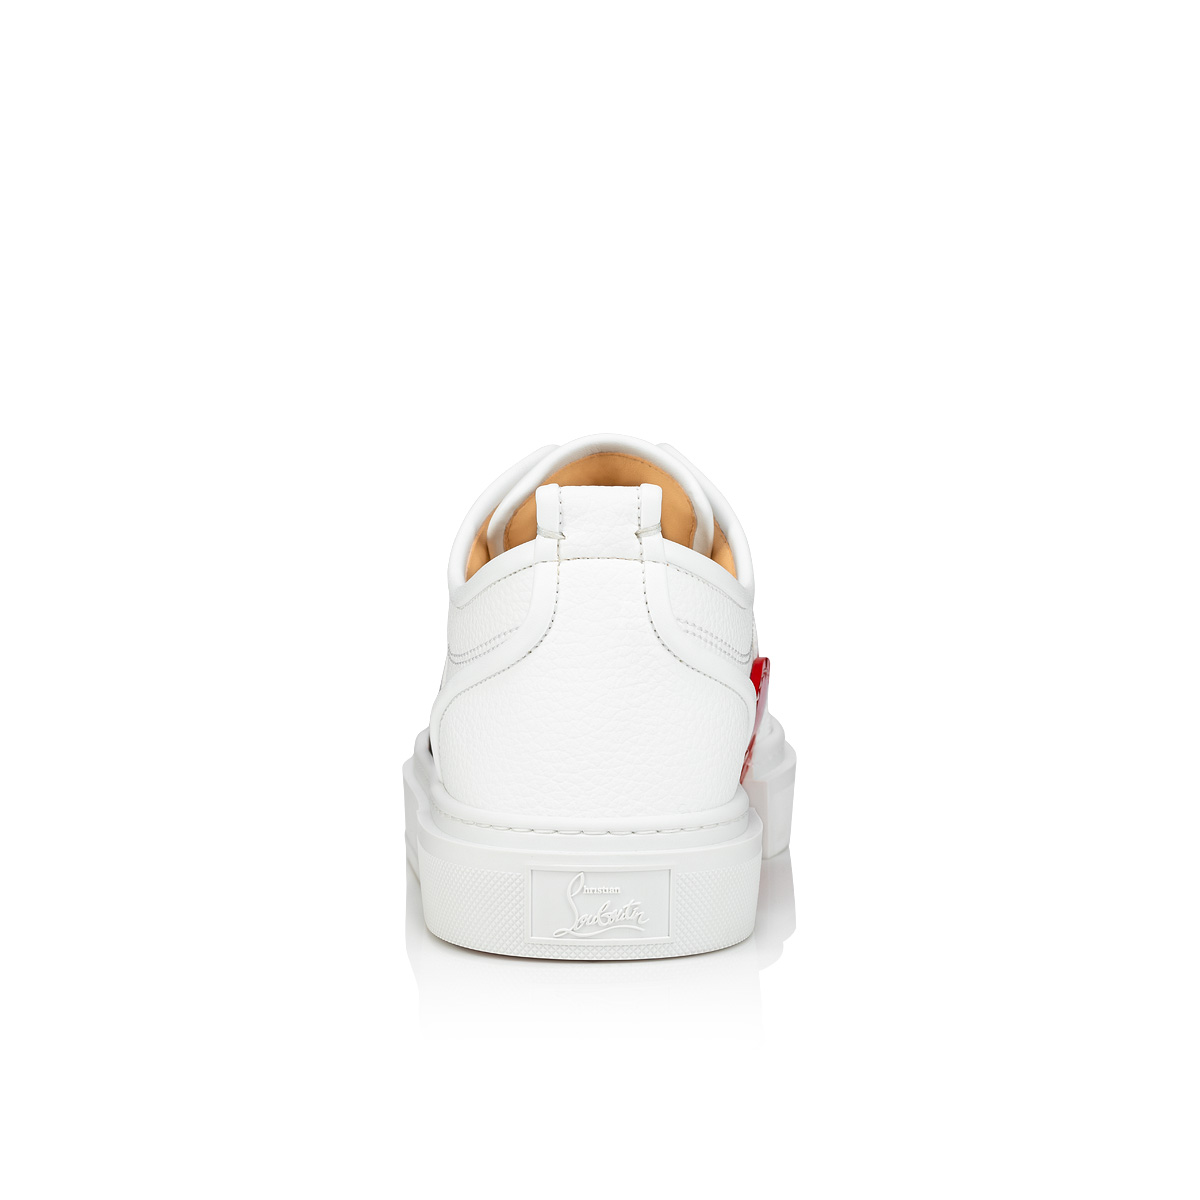 Christian Louboutin Men's Adolescenza Sneaker - White - Low-top Sneakers - 10.5